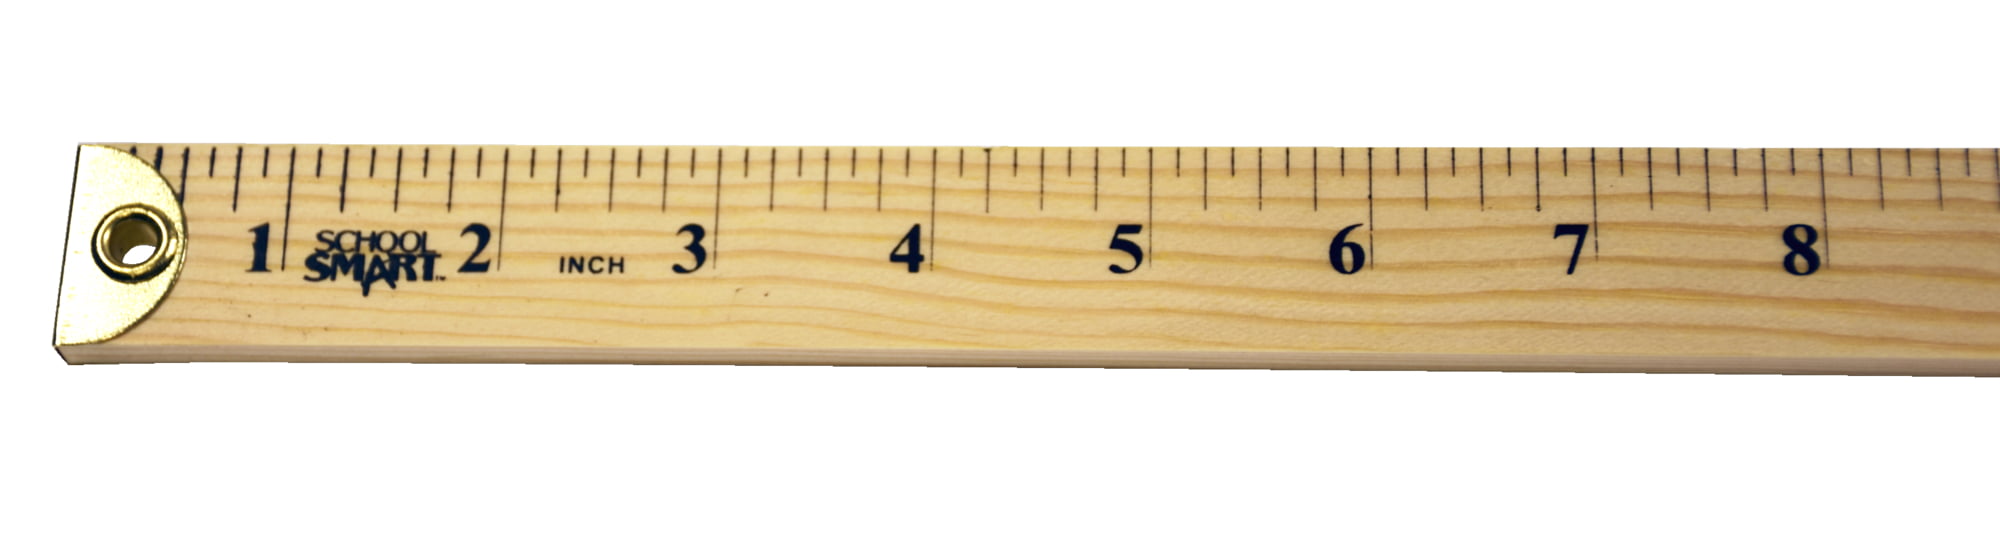 School Smart Wooden Meter Stick with Plain Ends